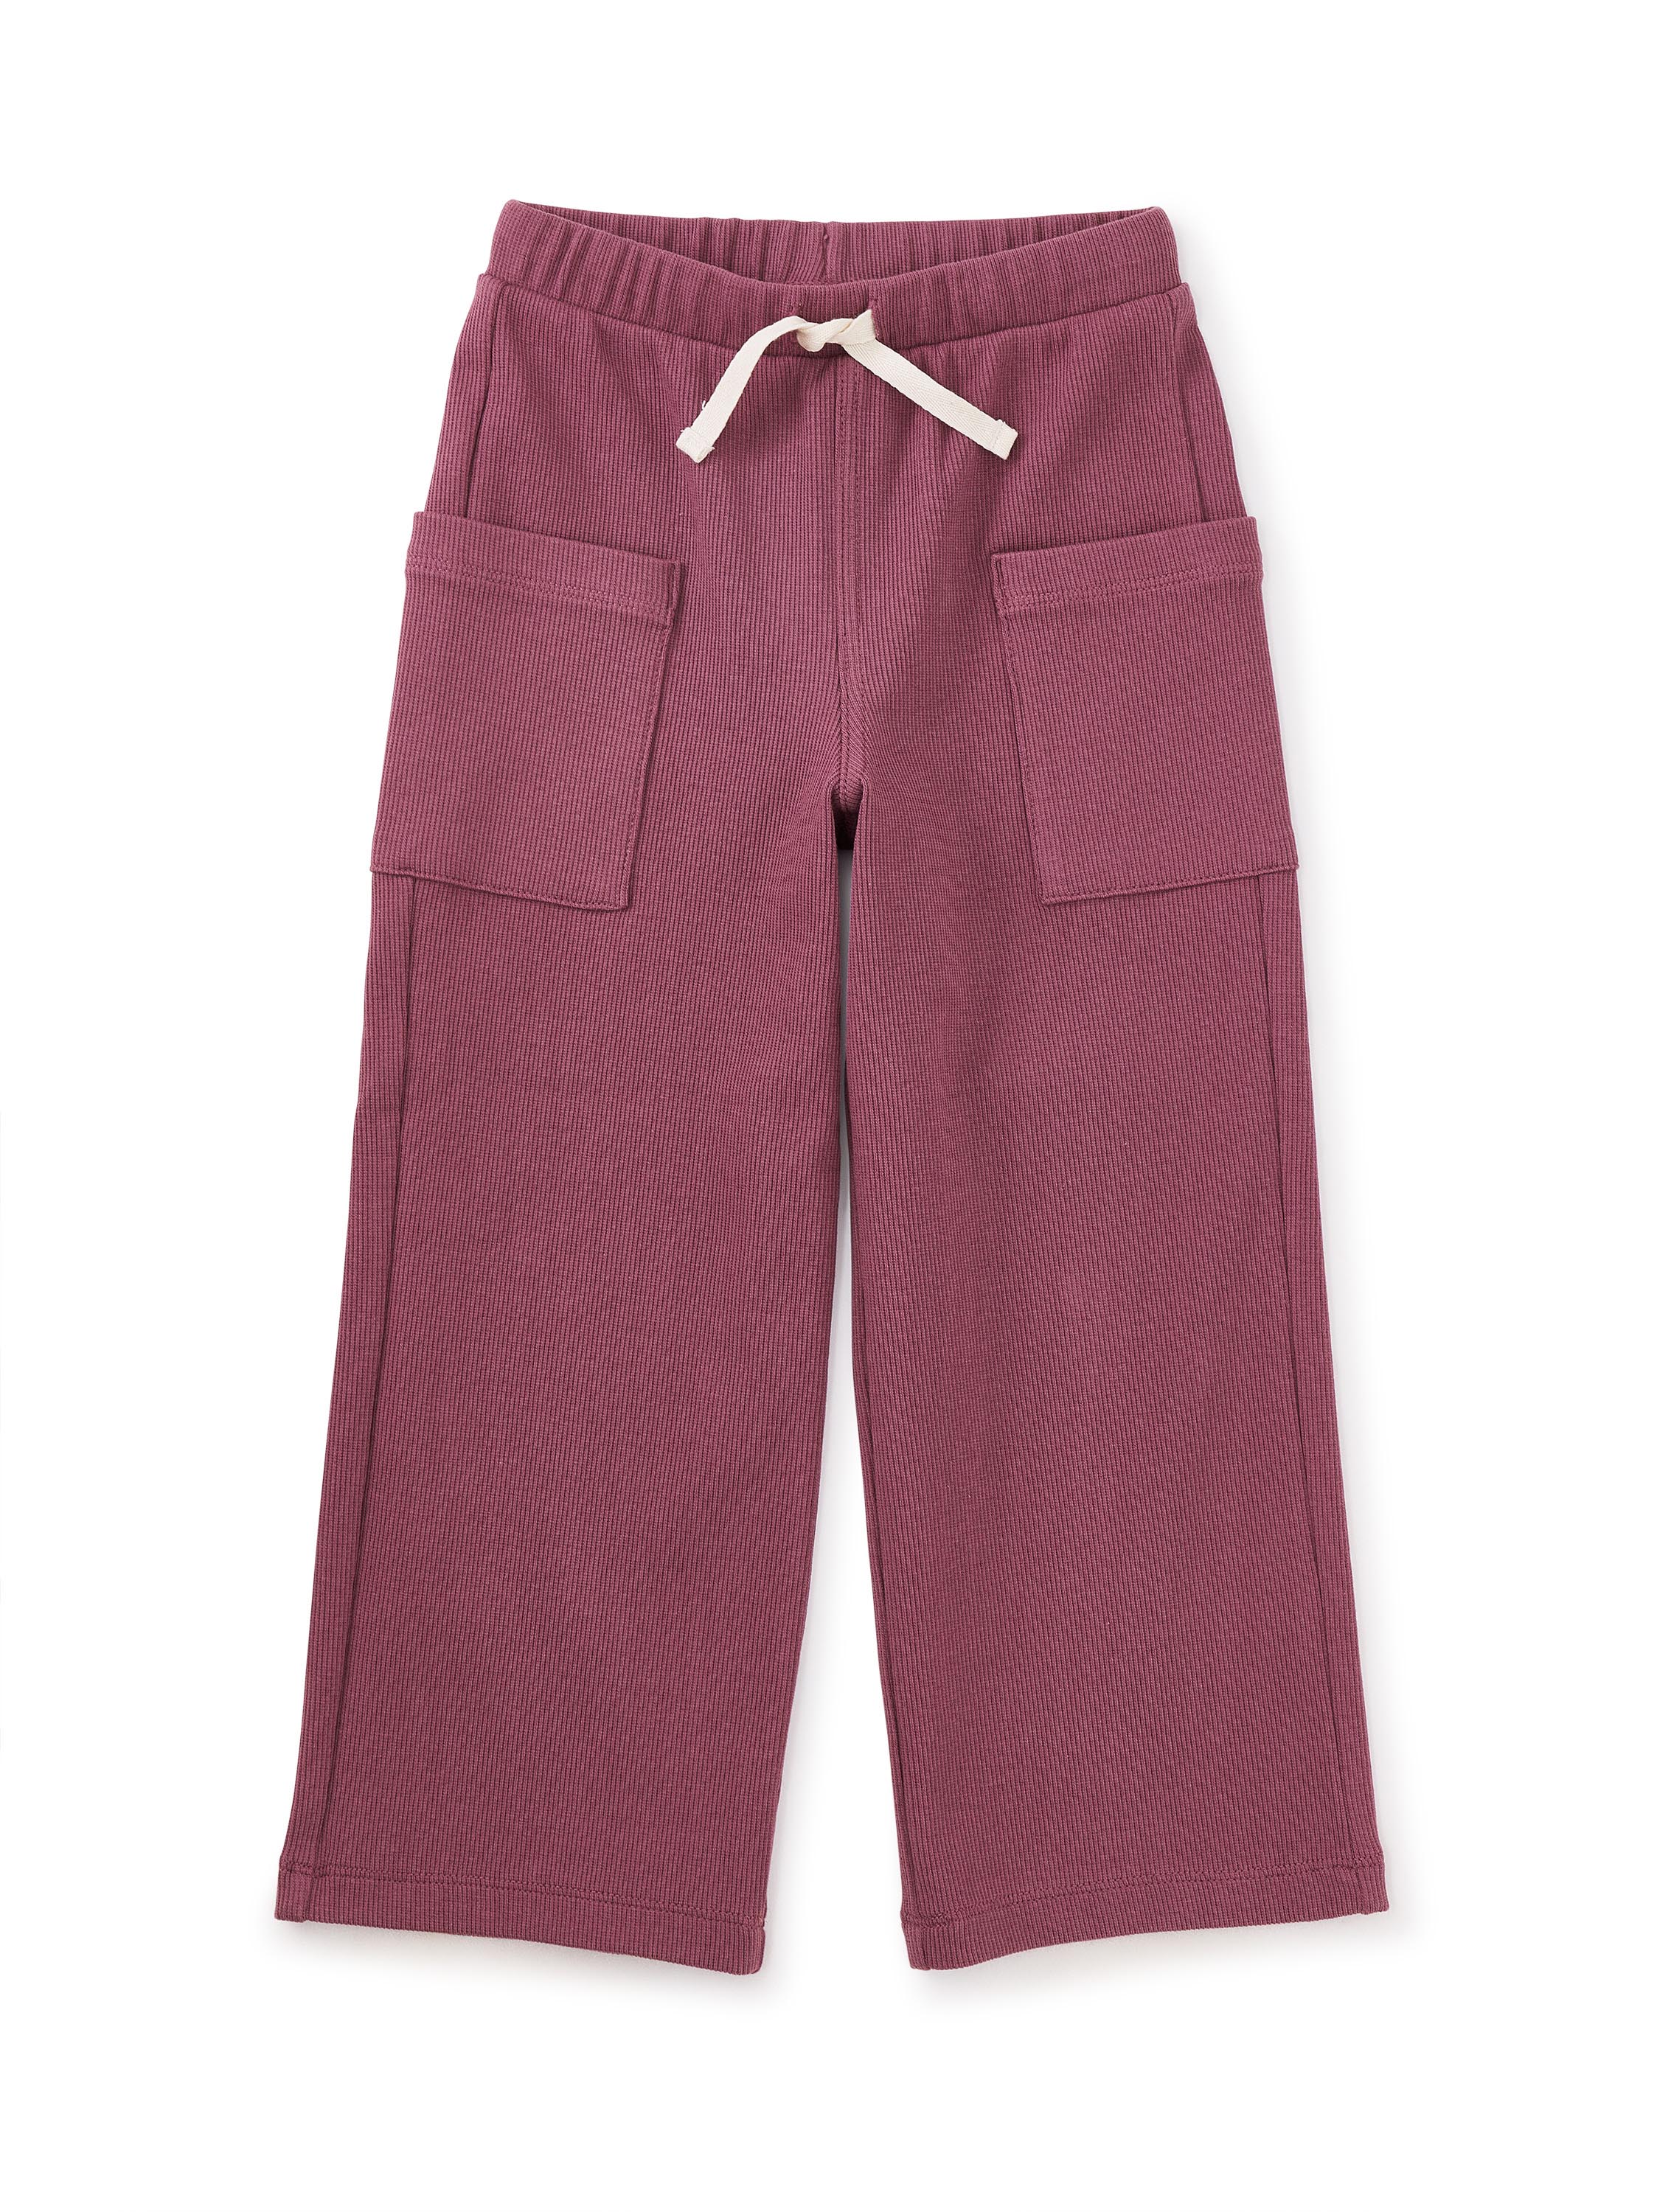 Shorts & Pants  Tea Collection